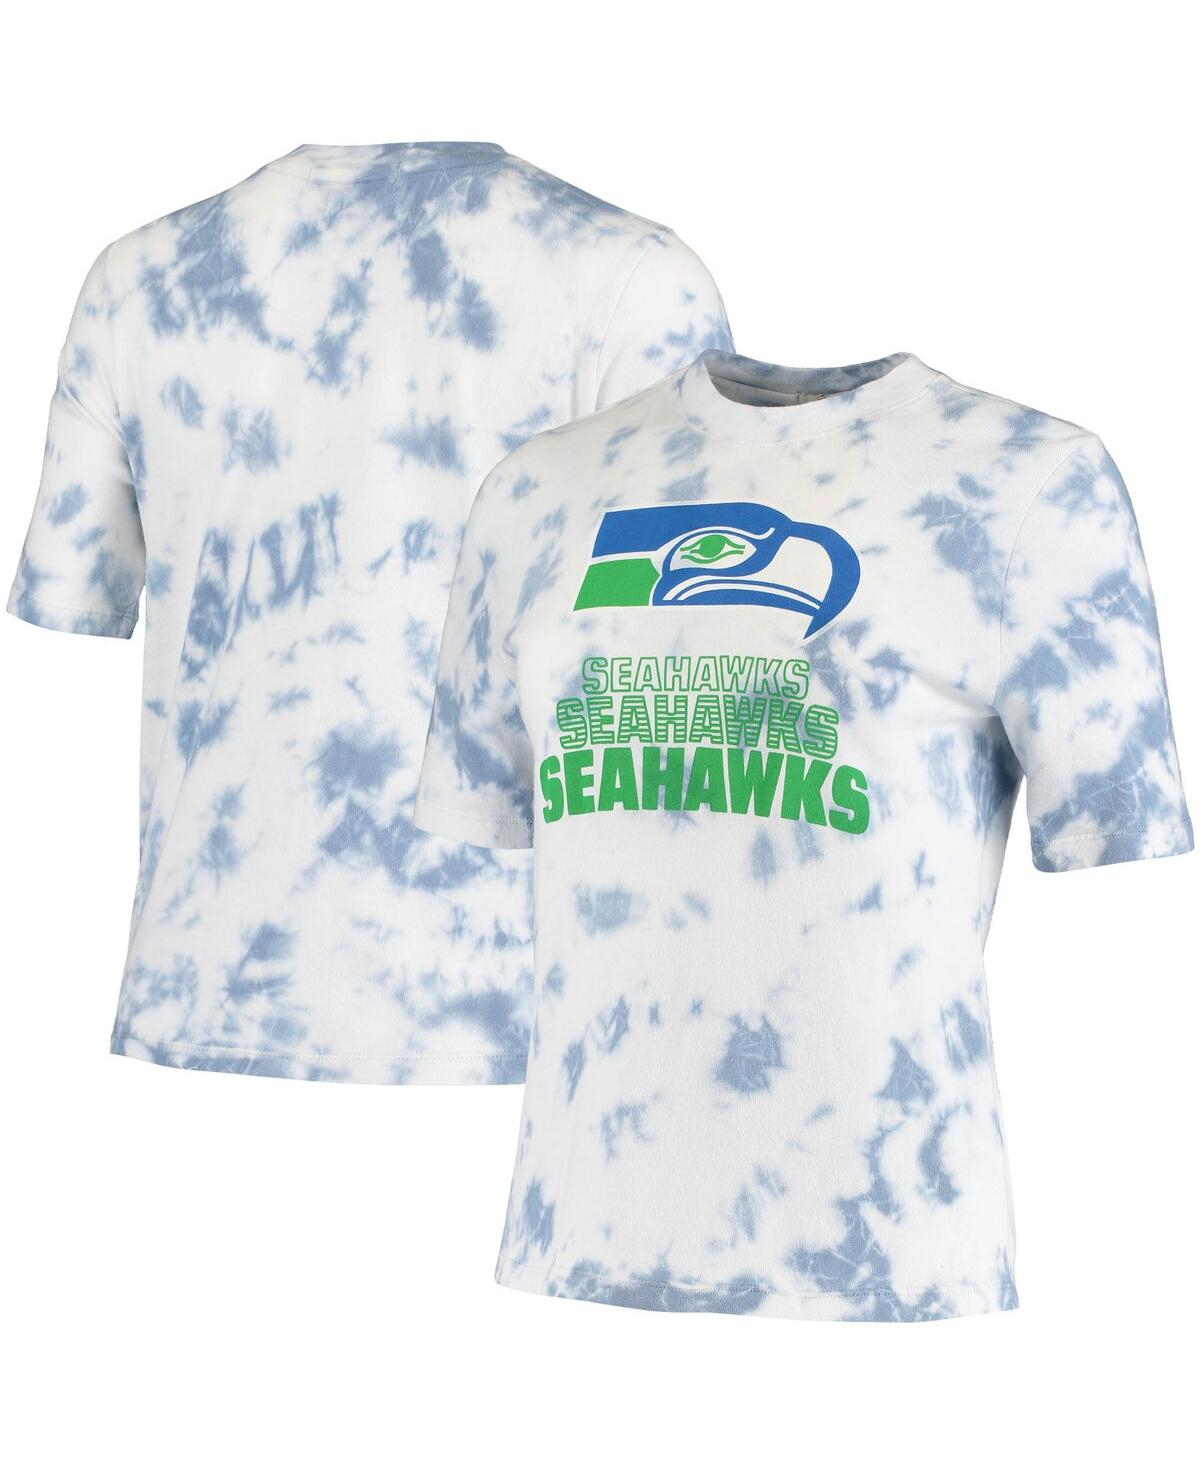 Women's Royal Seattle Seahawks Team Spirit Tie-Dye T-shirt - Royal